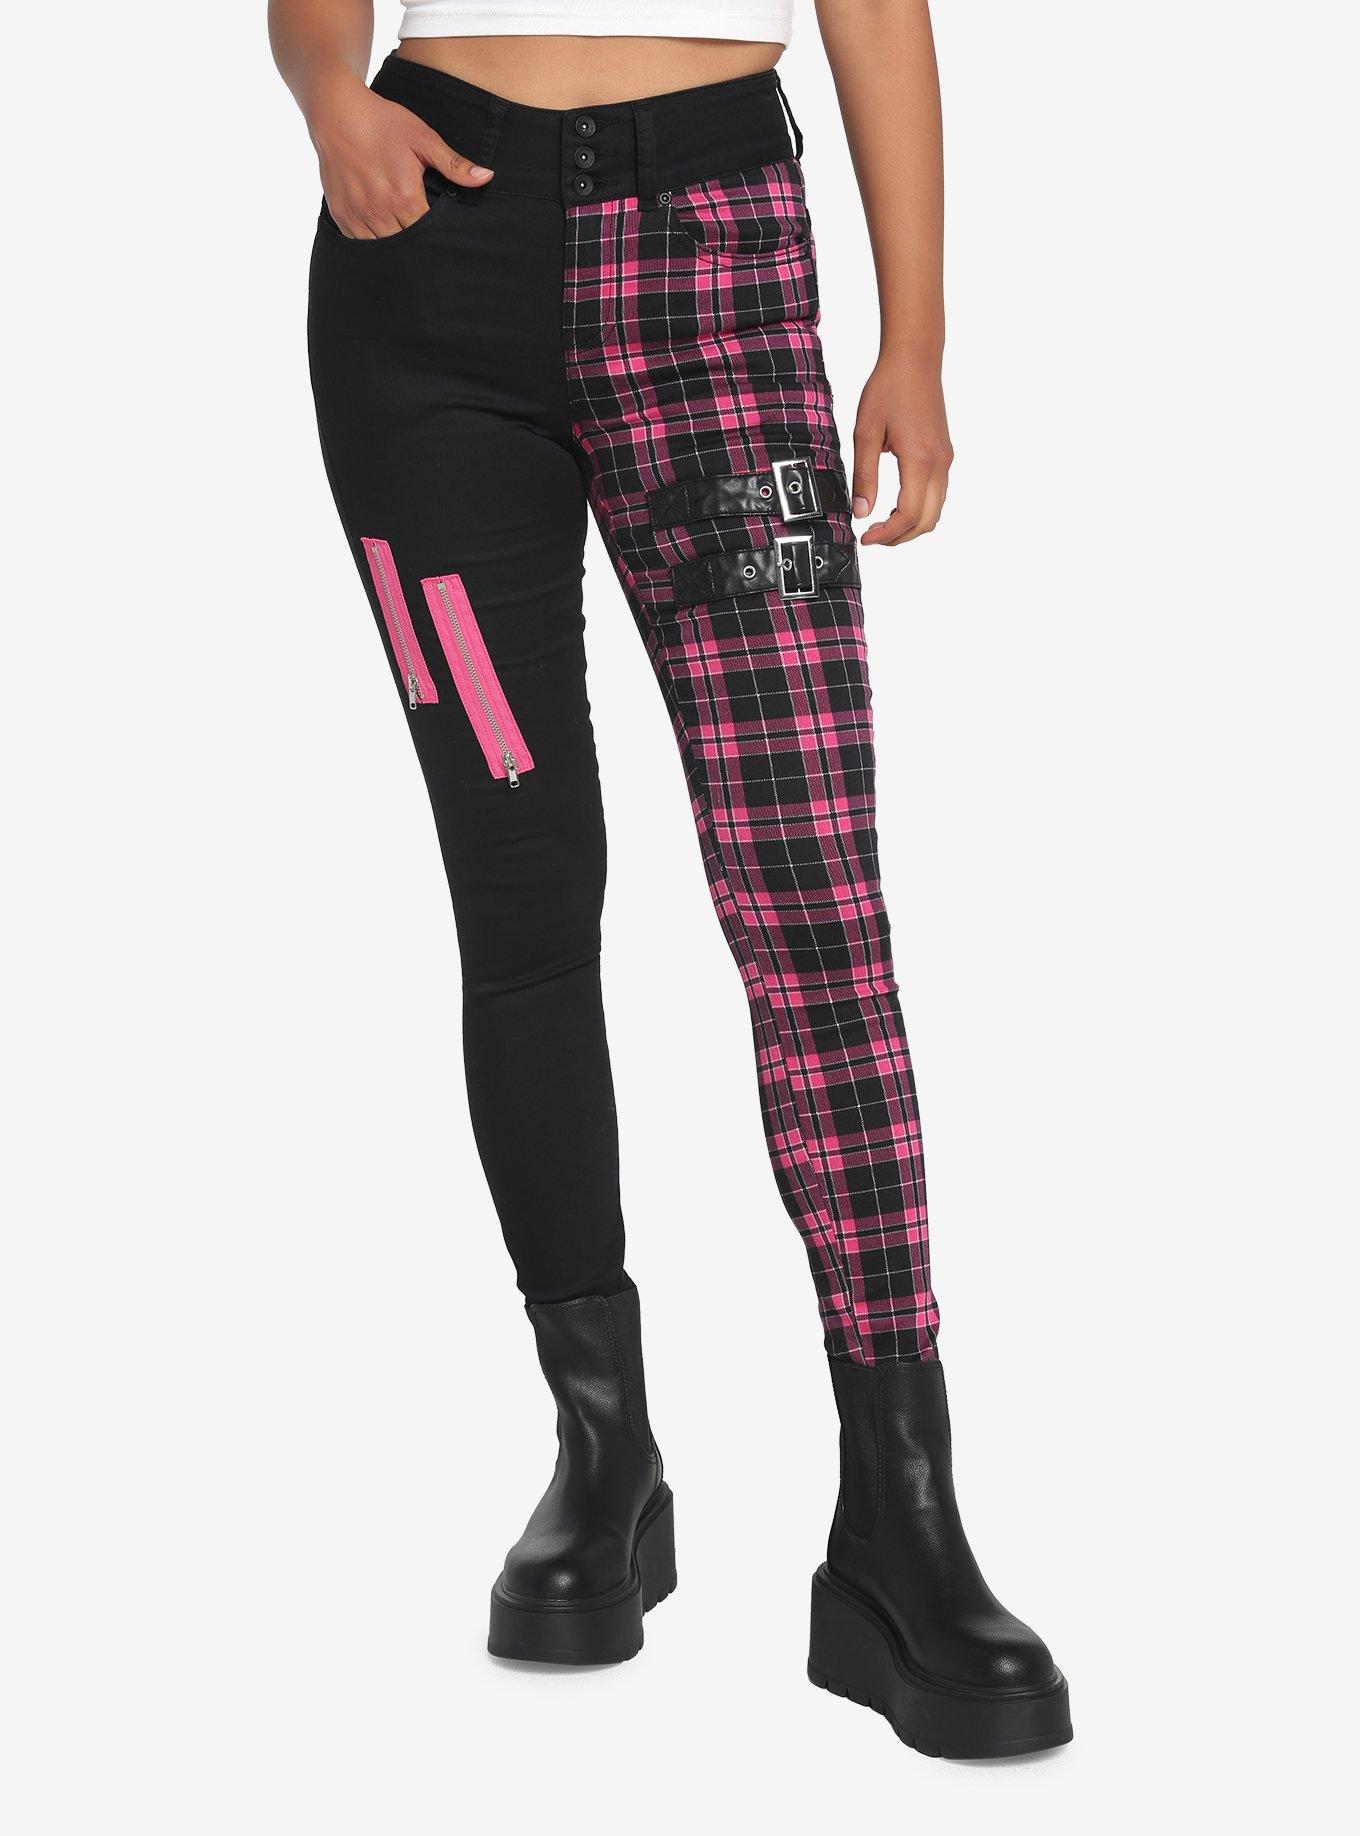 Hot Topic Black & Pink Plaid Split Chain Pants Large NWT